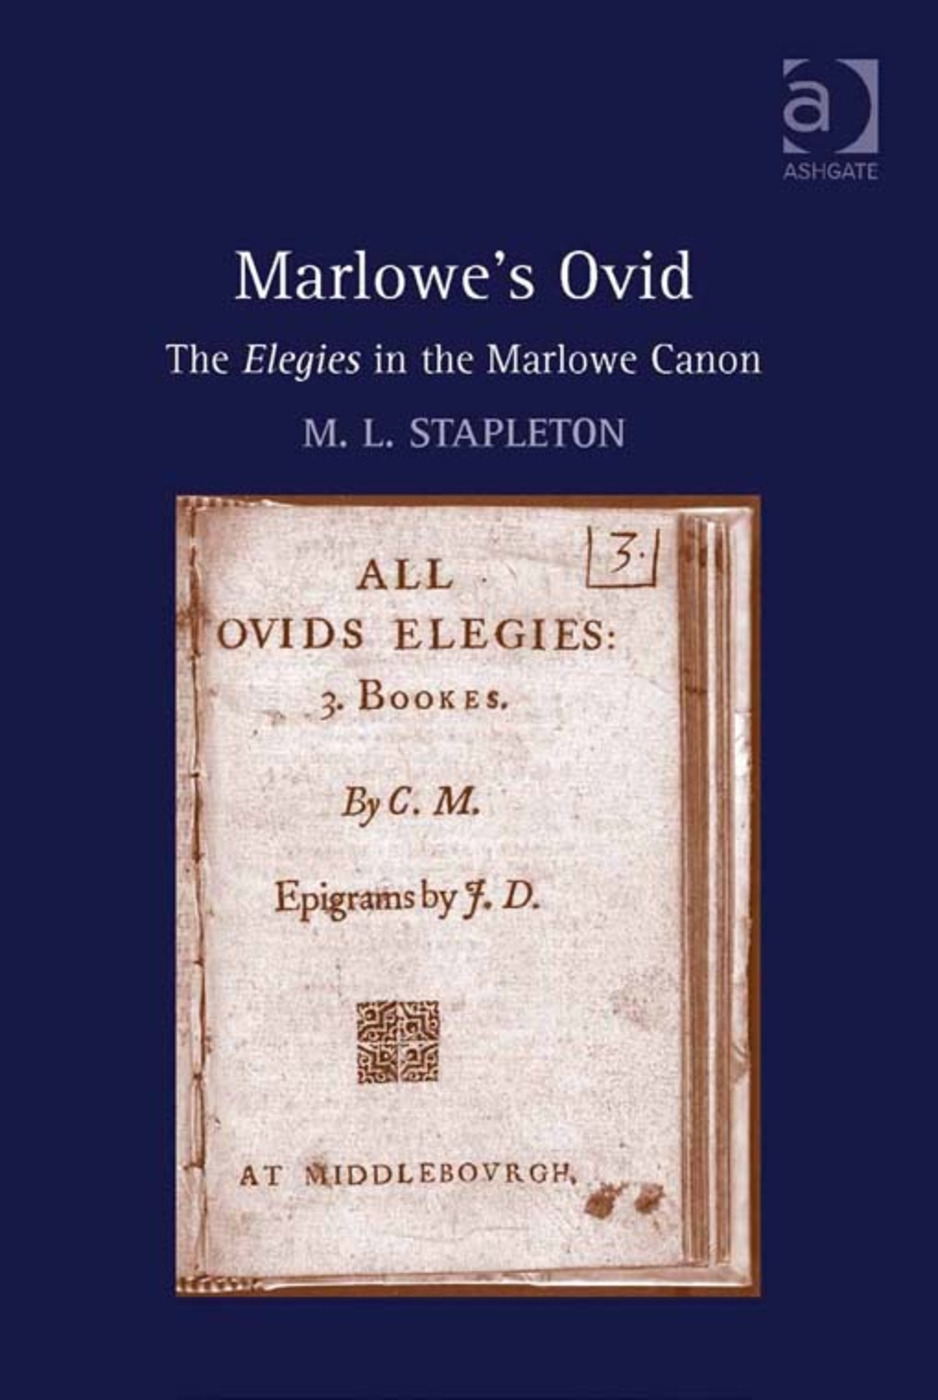 Marlowe’s Ovid: The Elegies in the Marlowe Canon. M.L. Stapleton